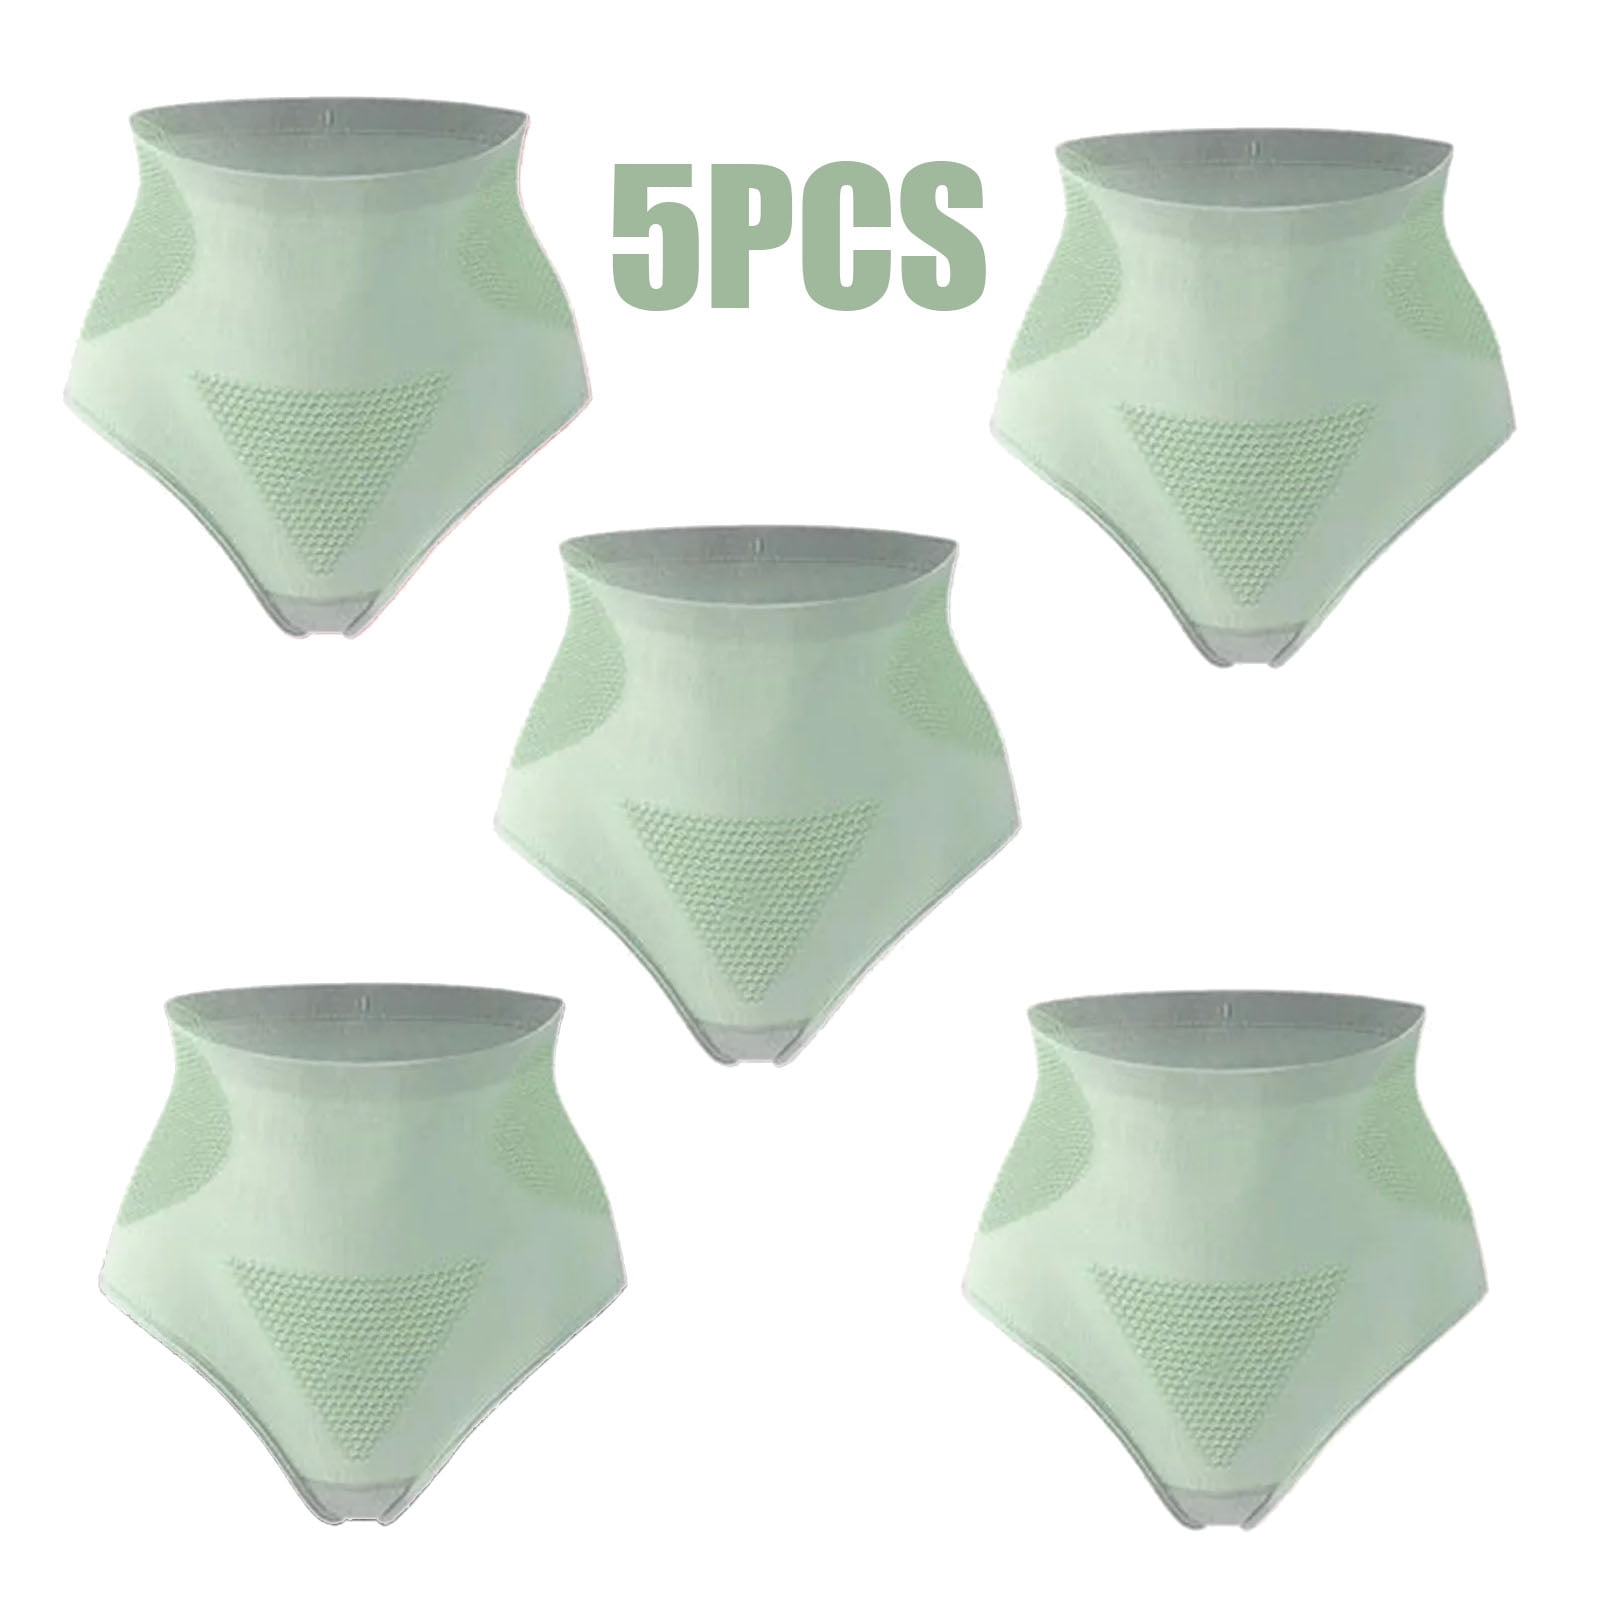 5PCS Slimory Underwear Slimorypro Graphene Honeycomb Vaginal Tightening &  Body Shaping Briefs, Slimlift Panties for Women